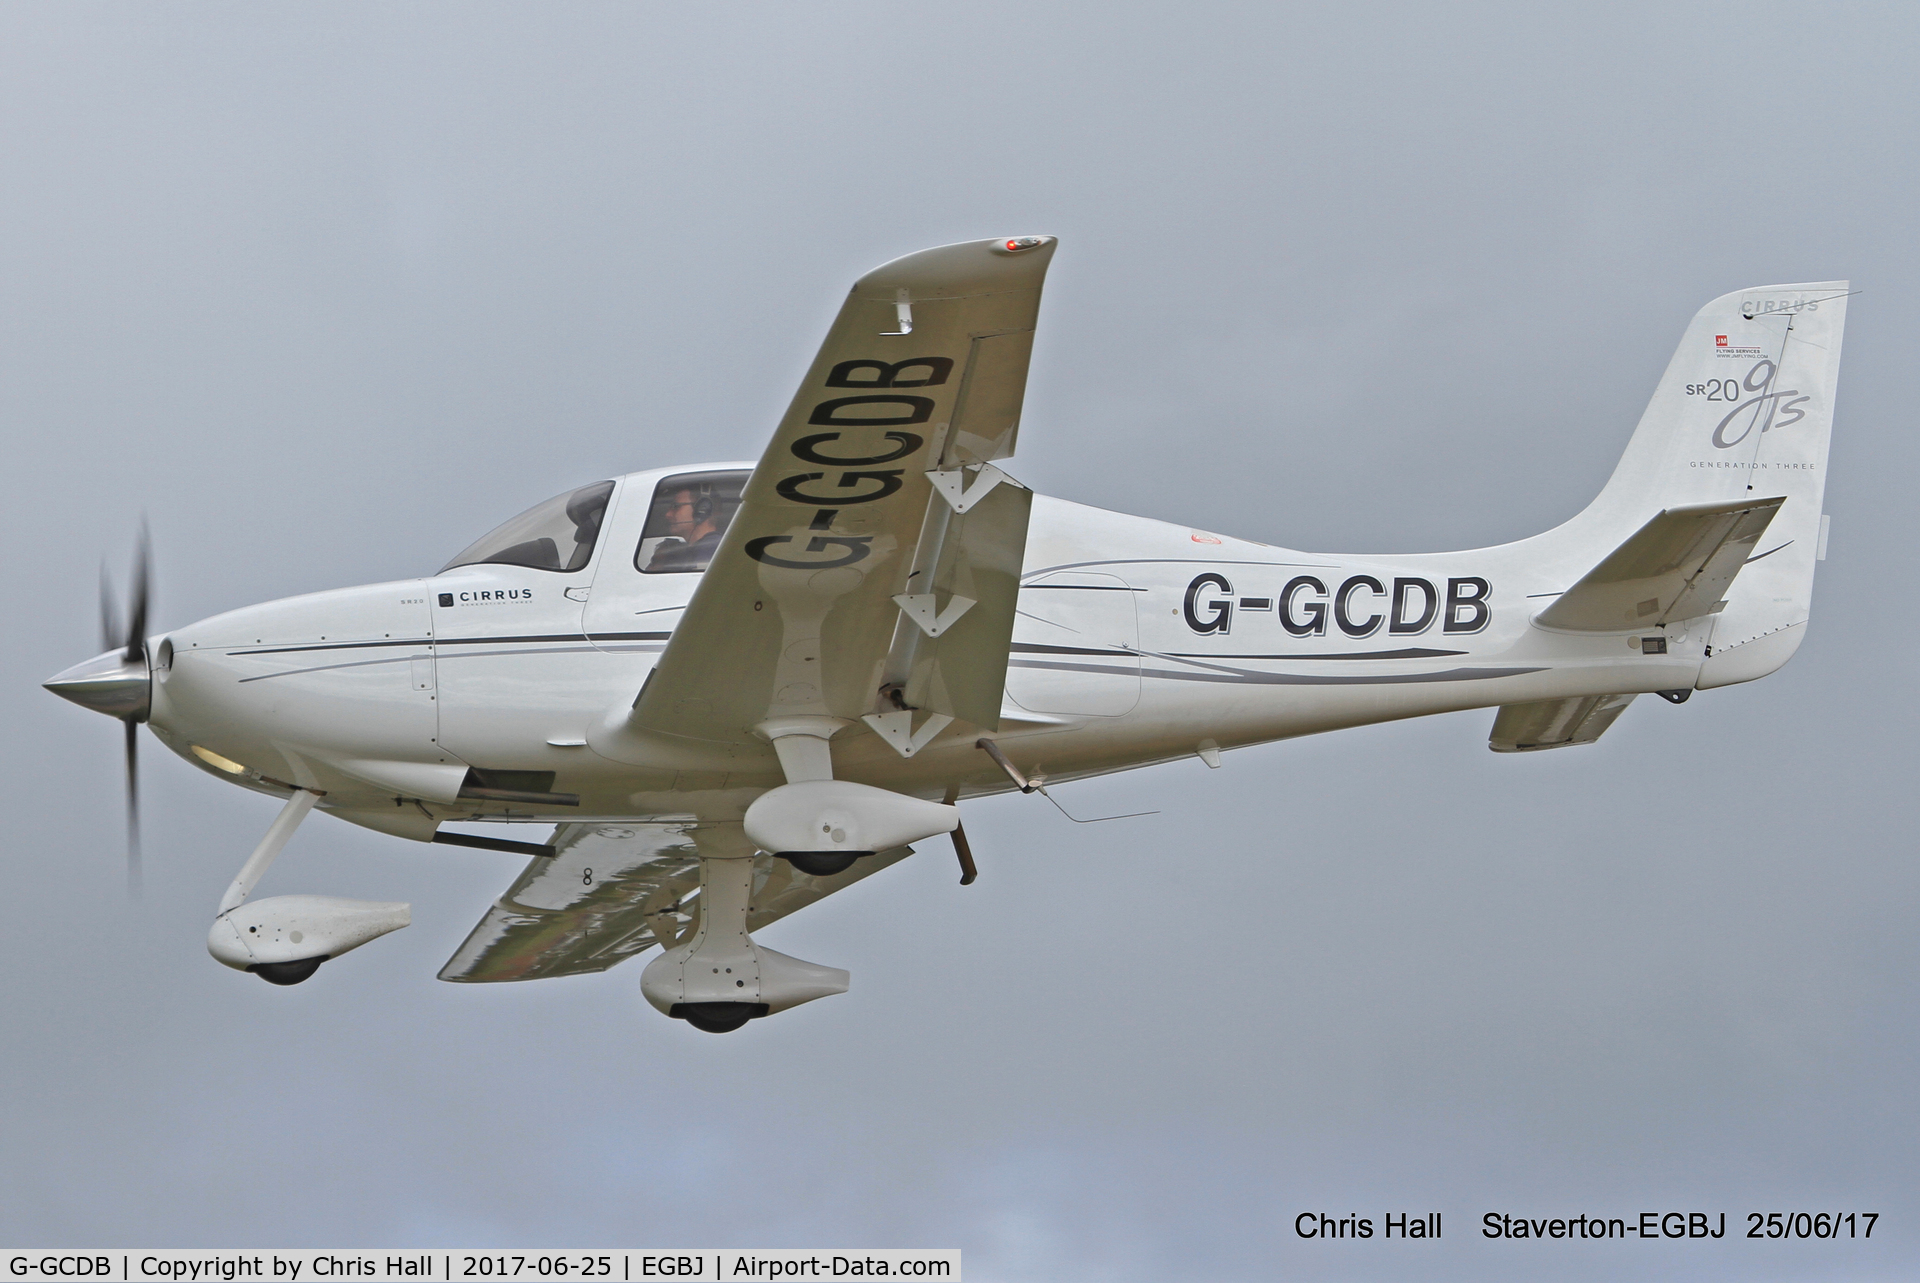 G-GCDB, 2009 Cirrus SR20 GTS C/N 1967, Project Propeller at Staverton